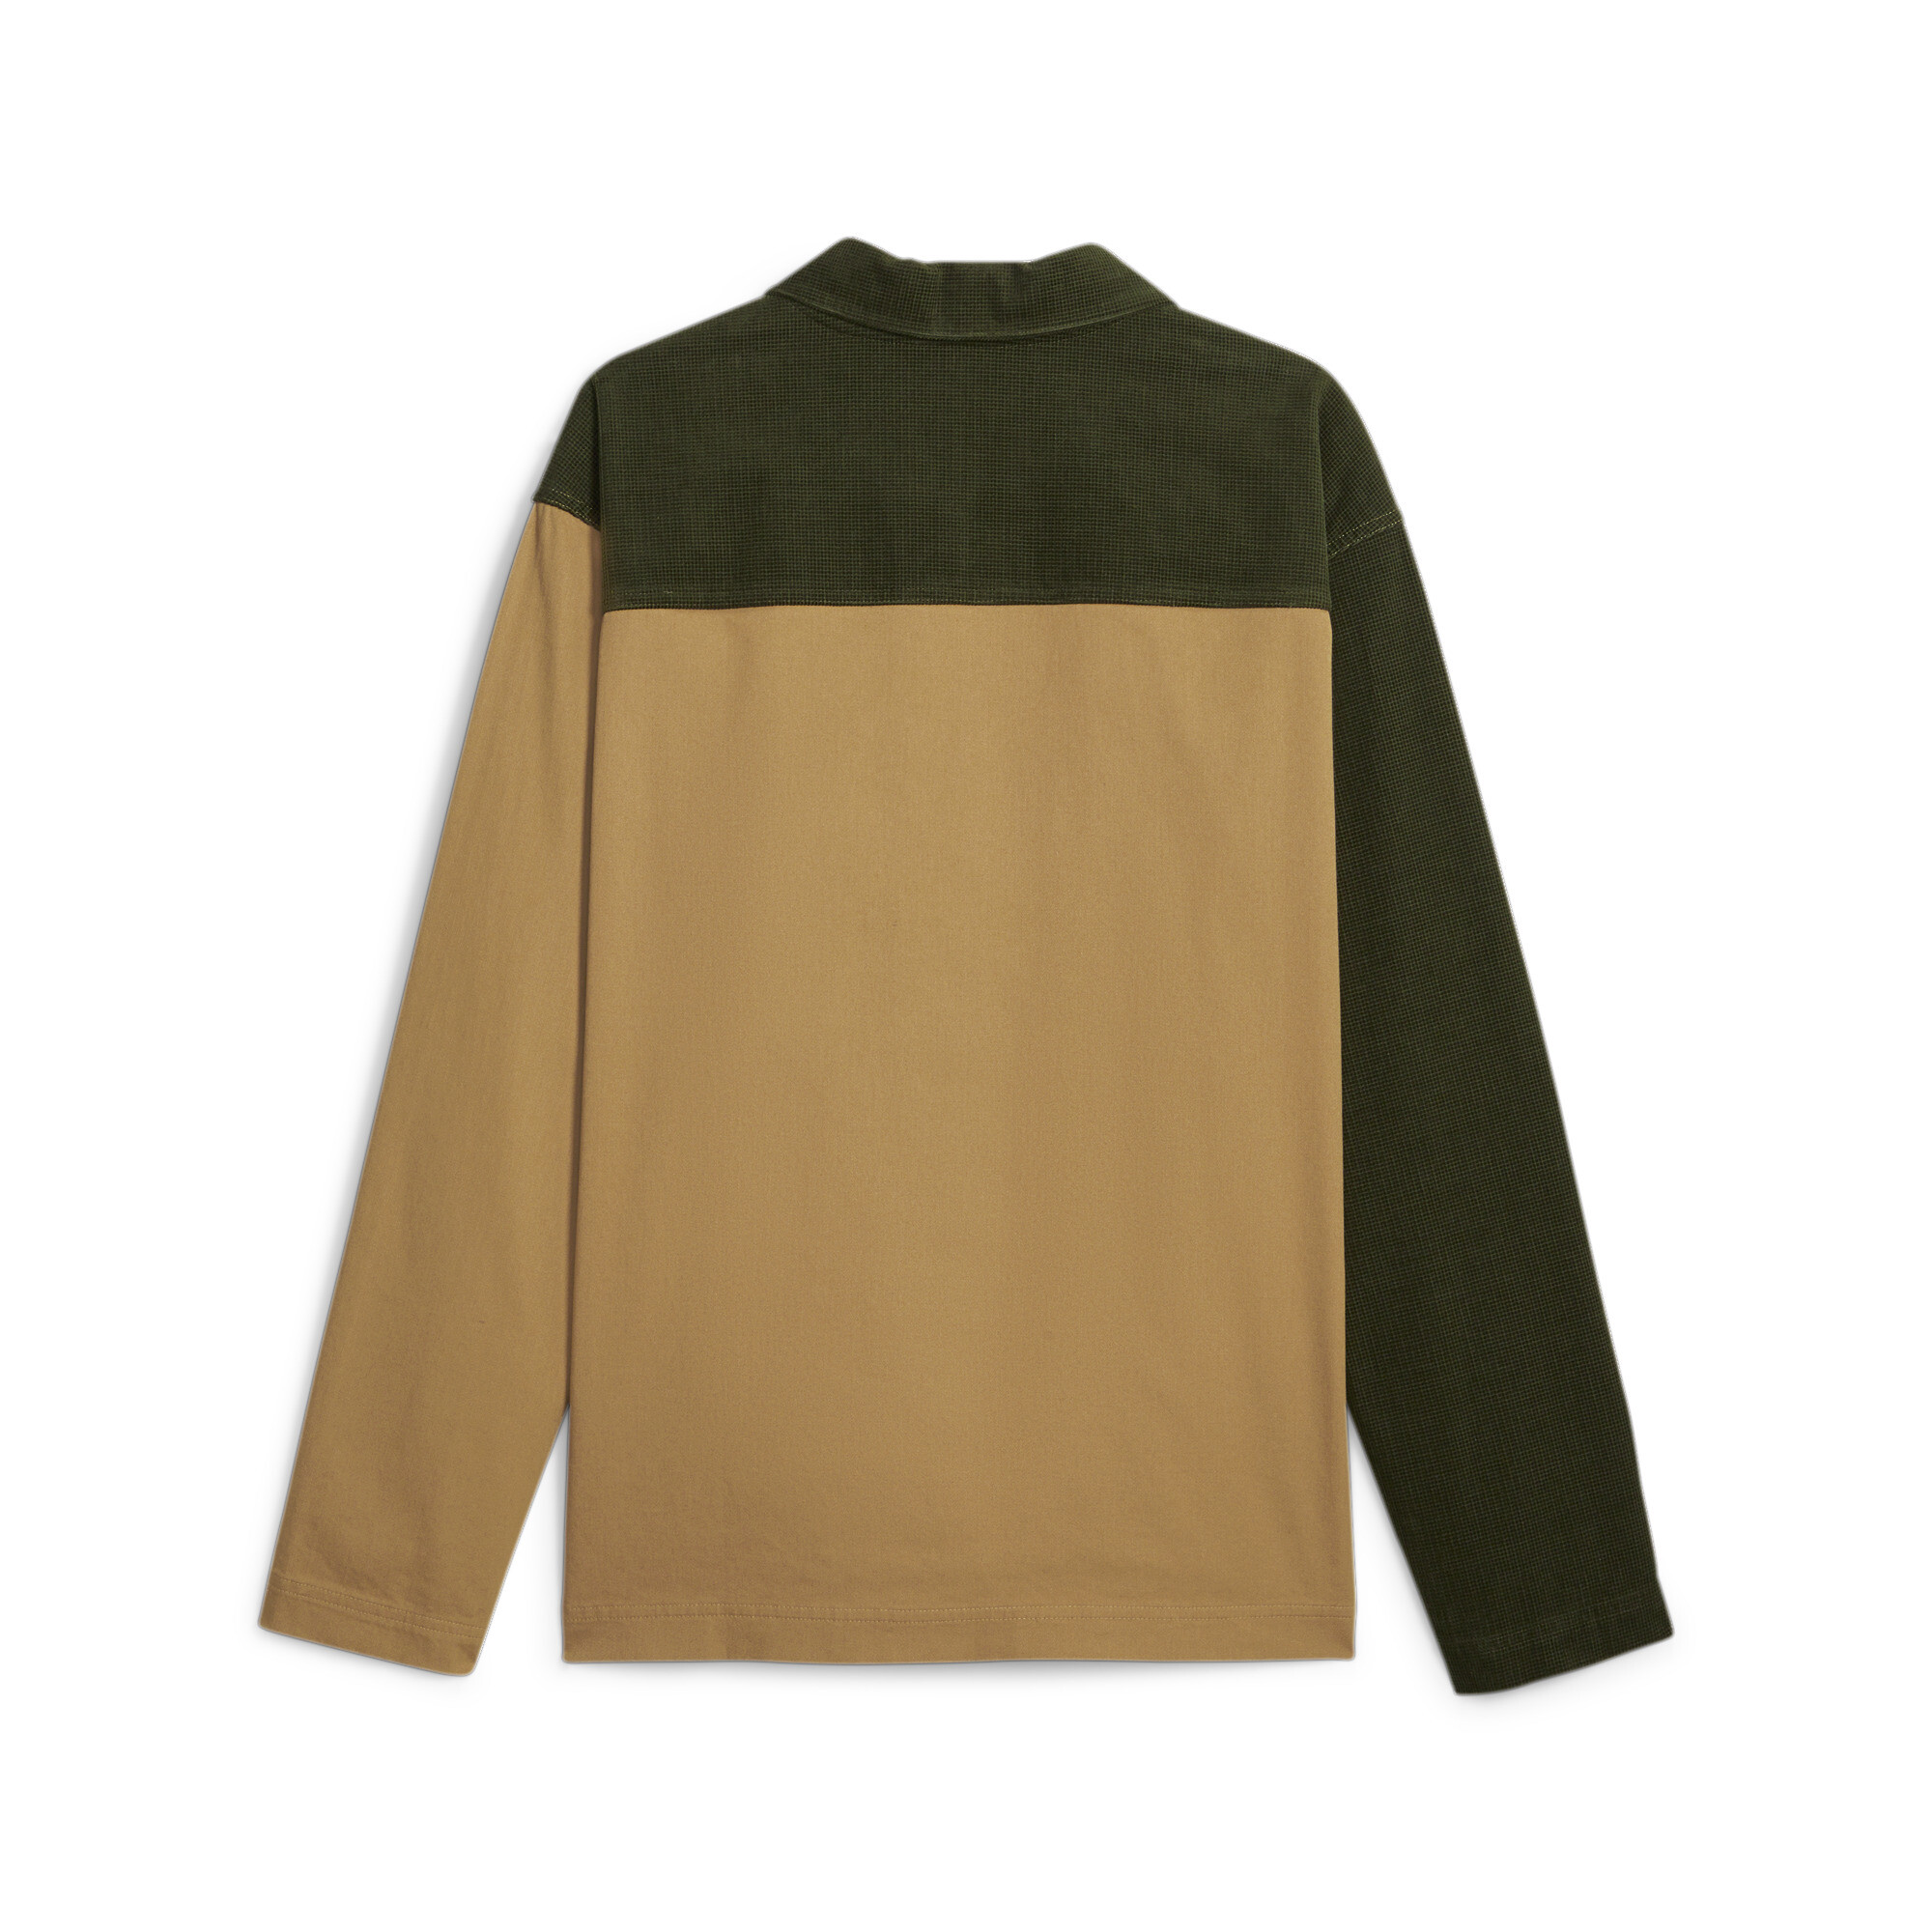 Men's Puma DOWNTOWN's Corduroy Shirt, Green, Size XXL, Clothing